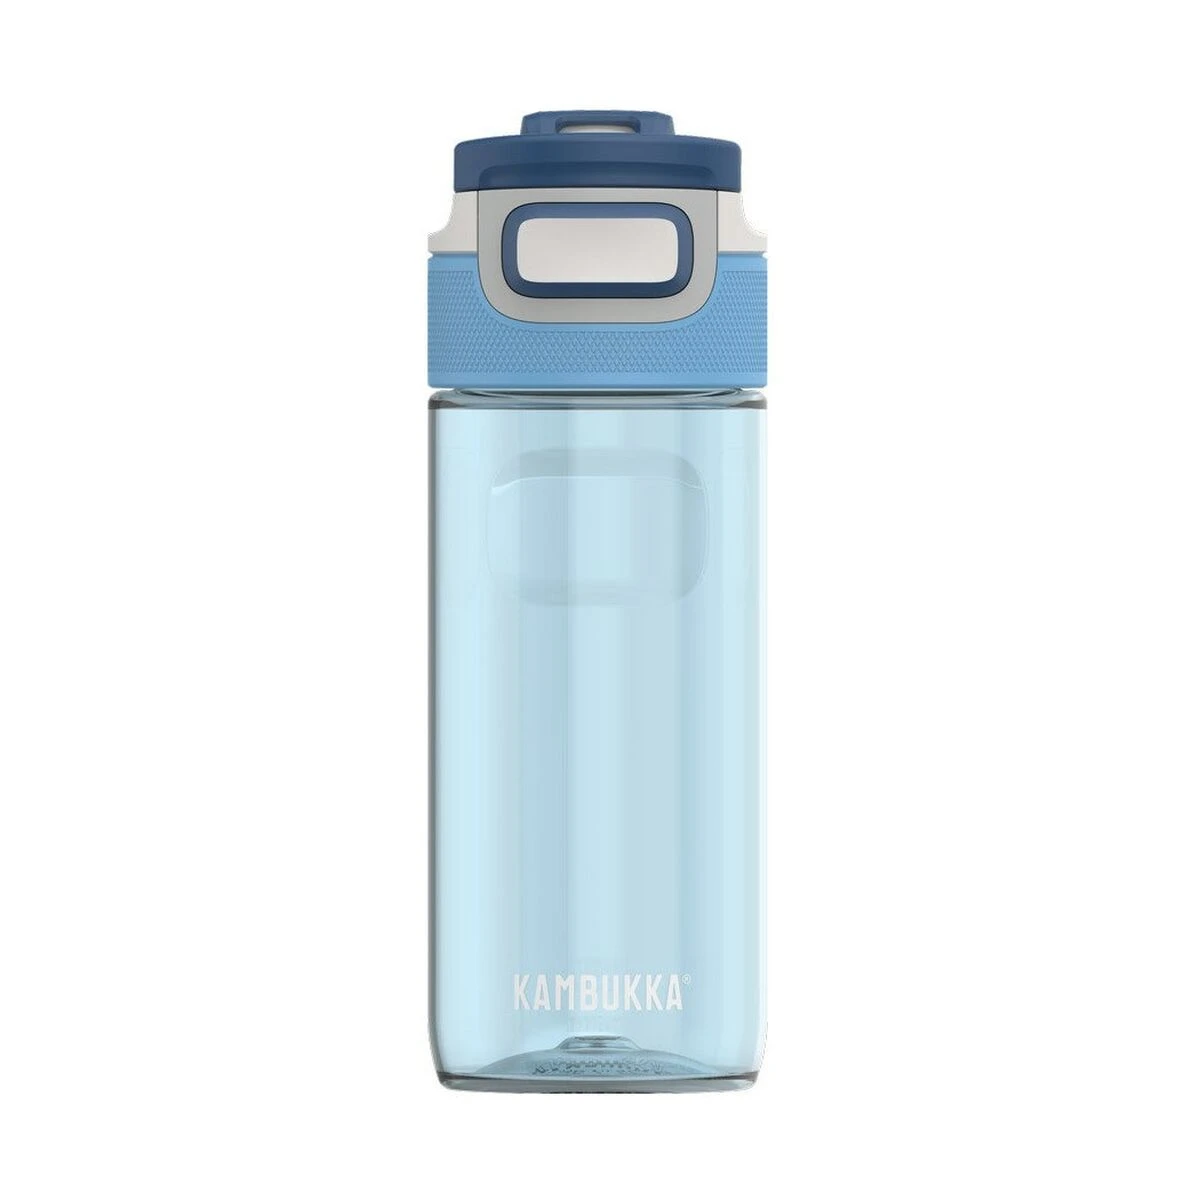 Transparent blue water bottle